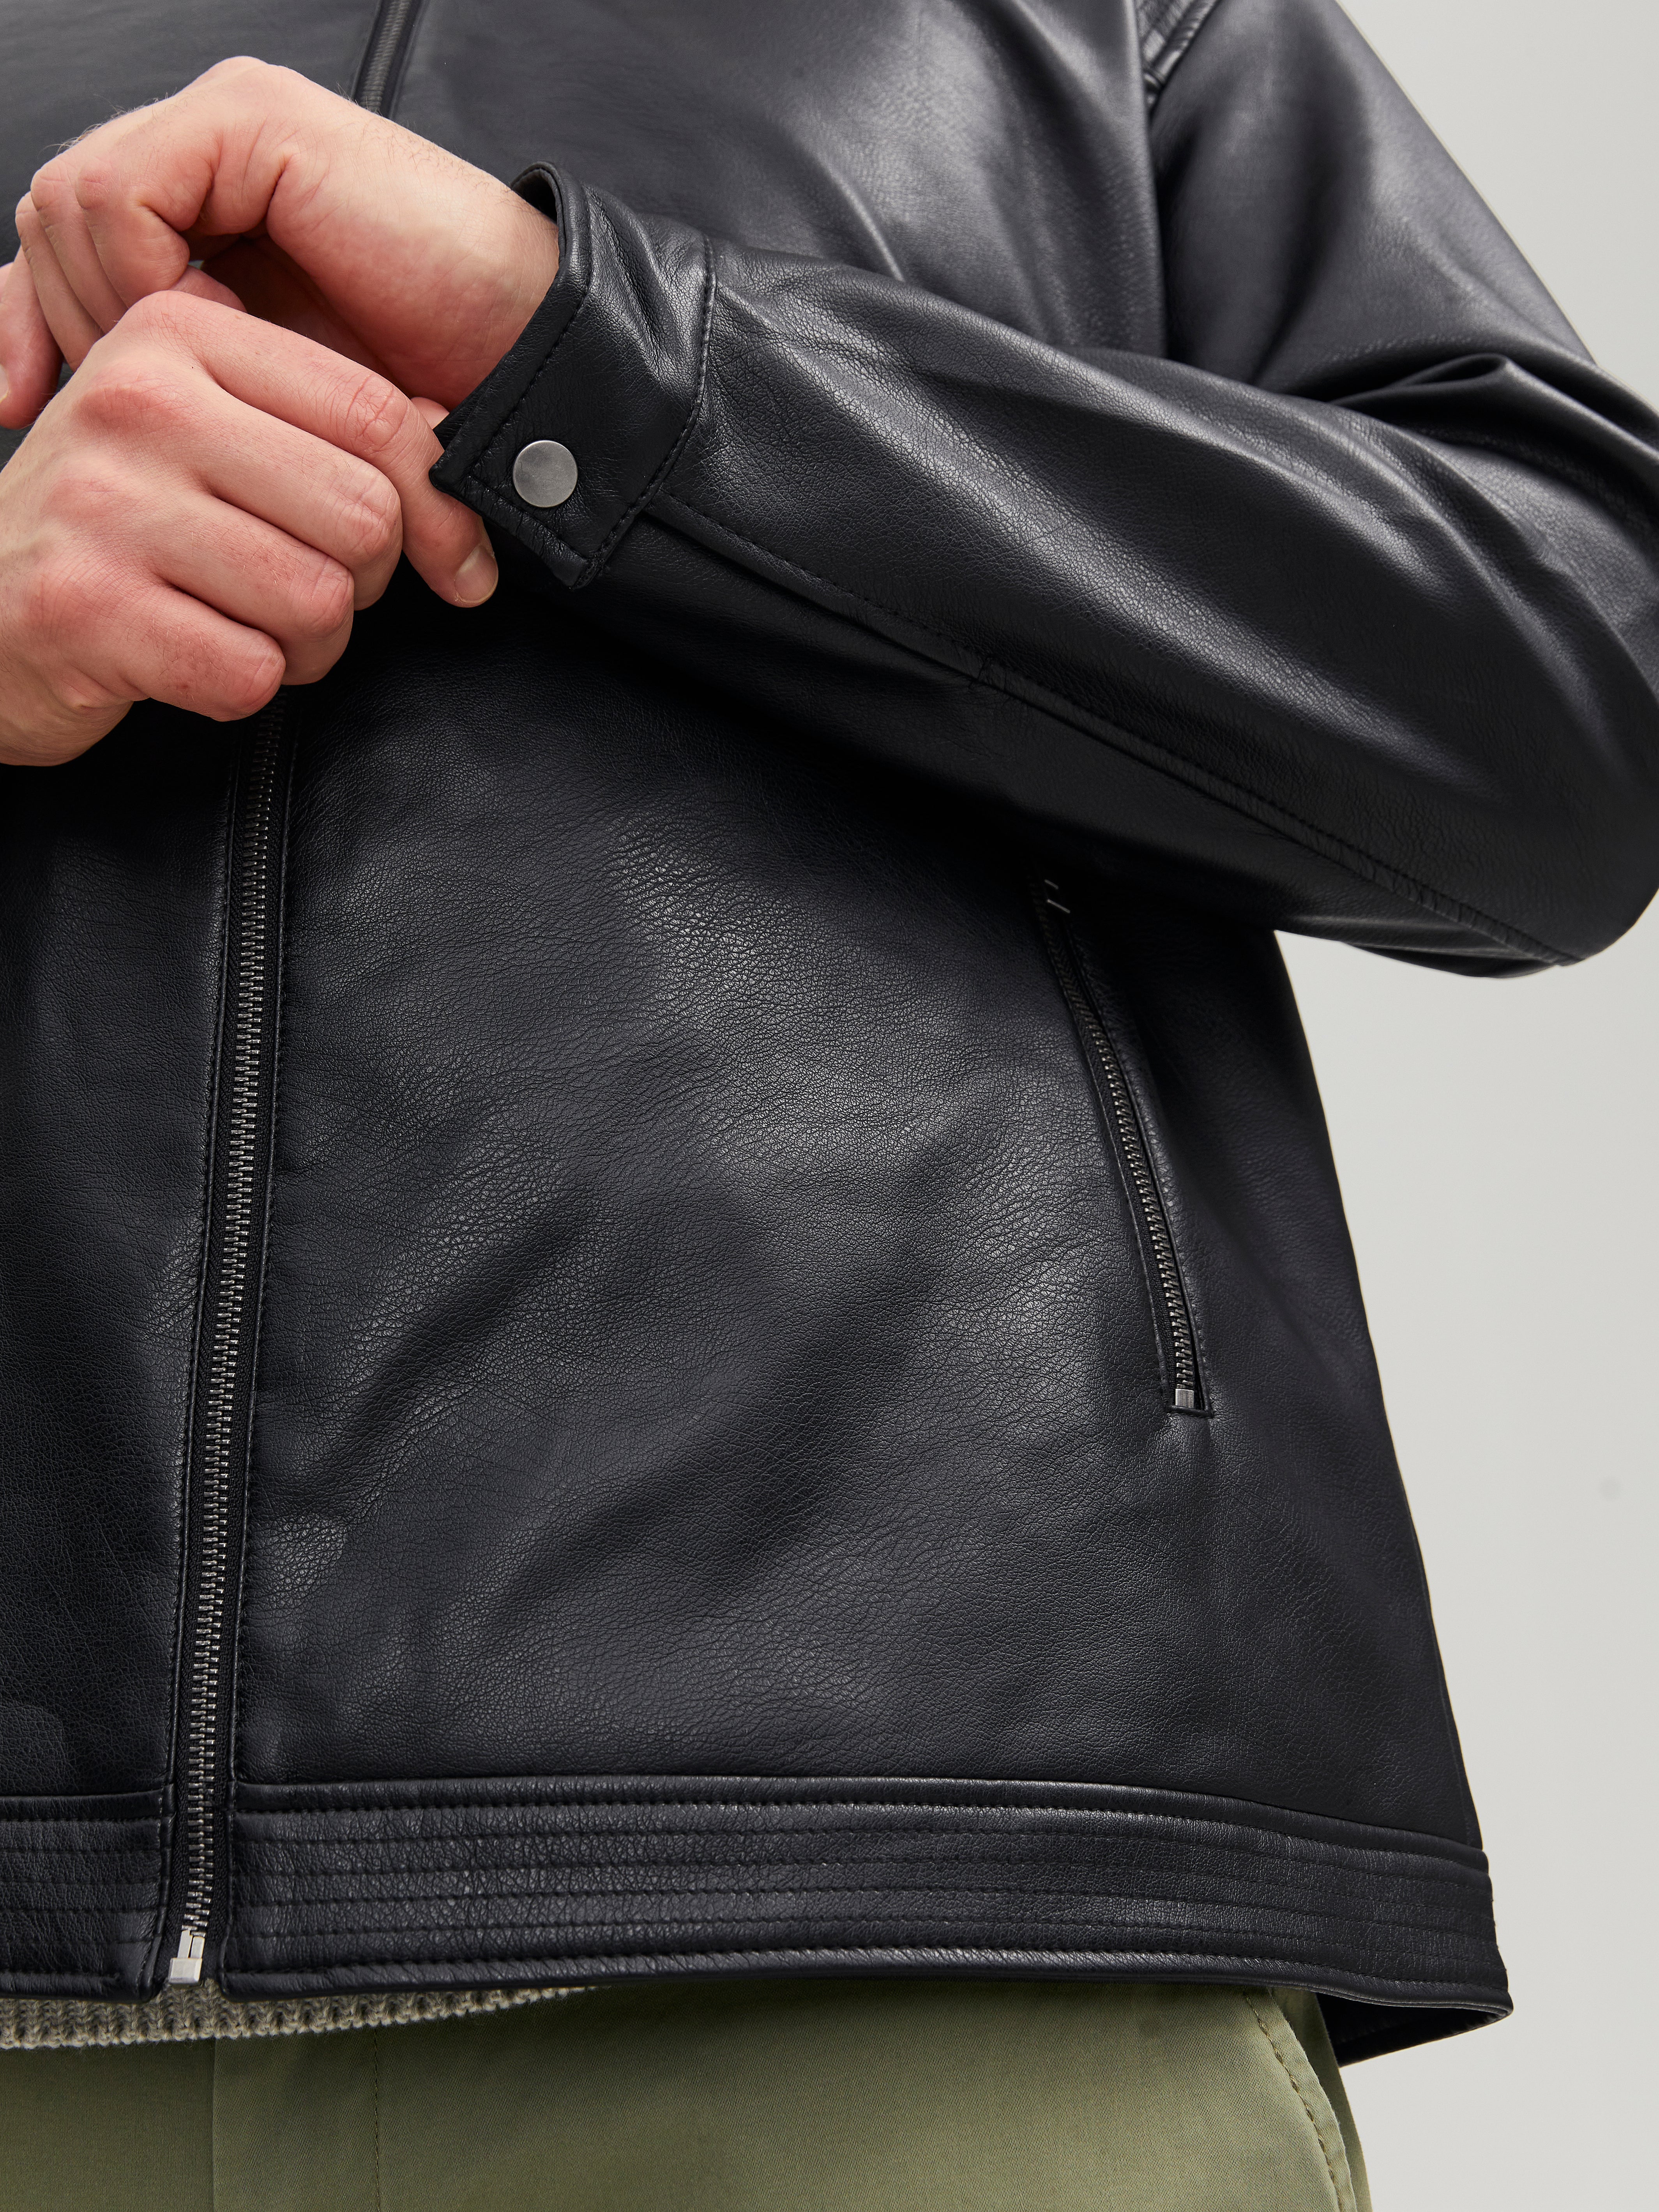 Barney's Originals Plus Clara real leather jacket | ASOS